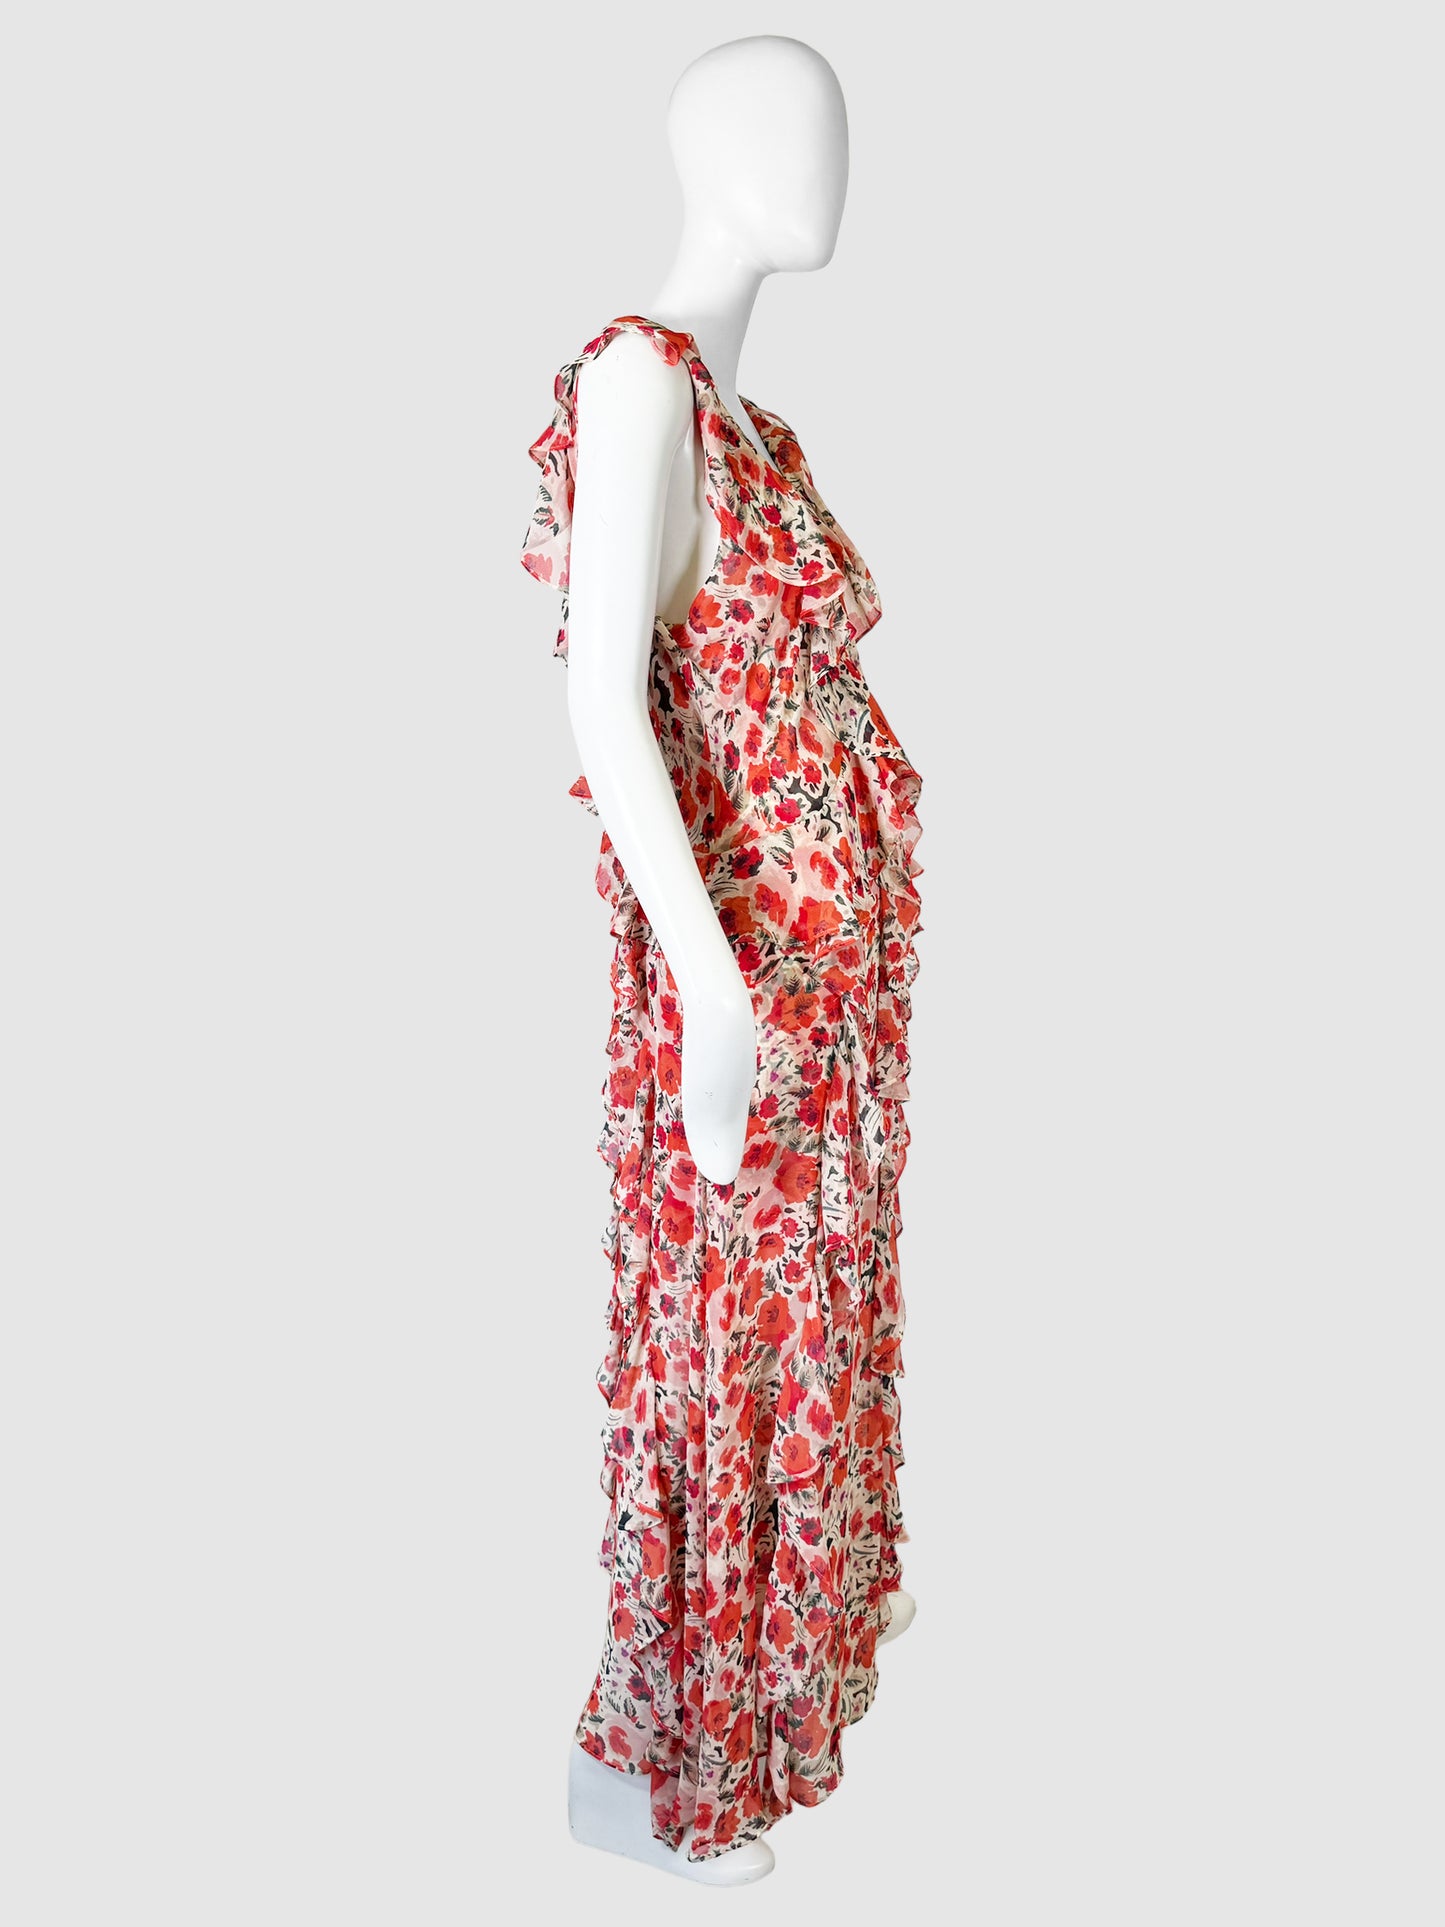 Floral Print Maxi Dress - Size L